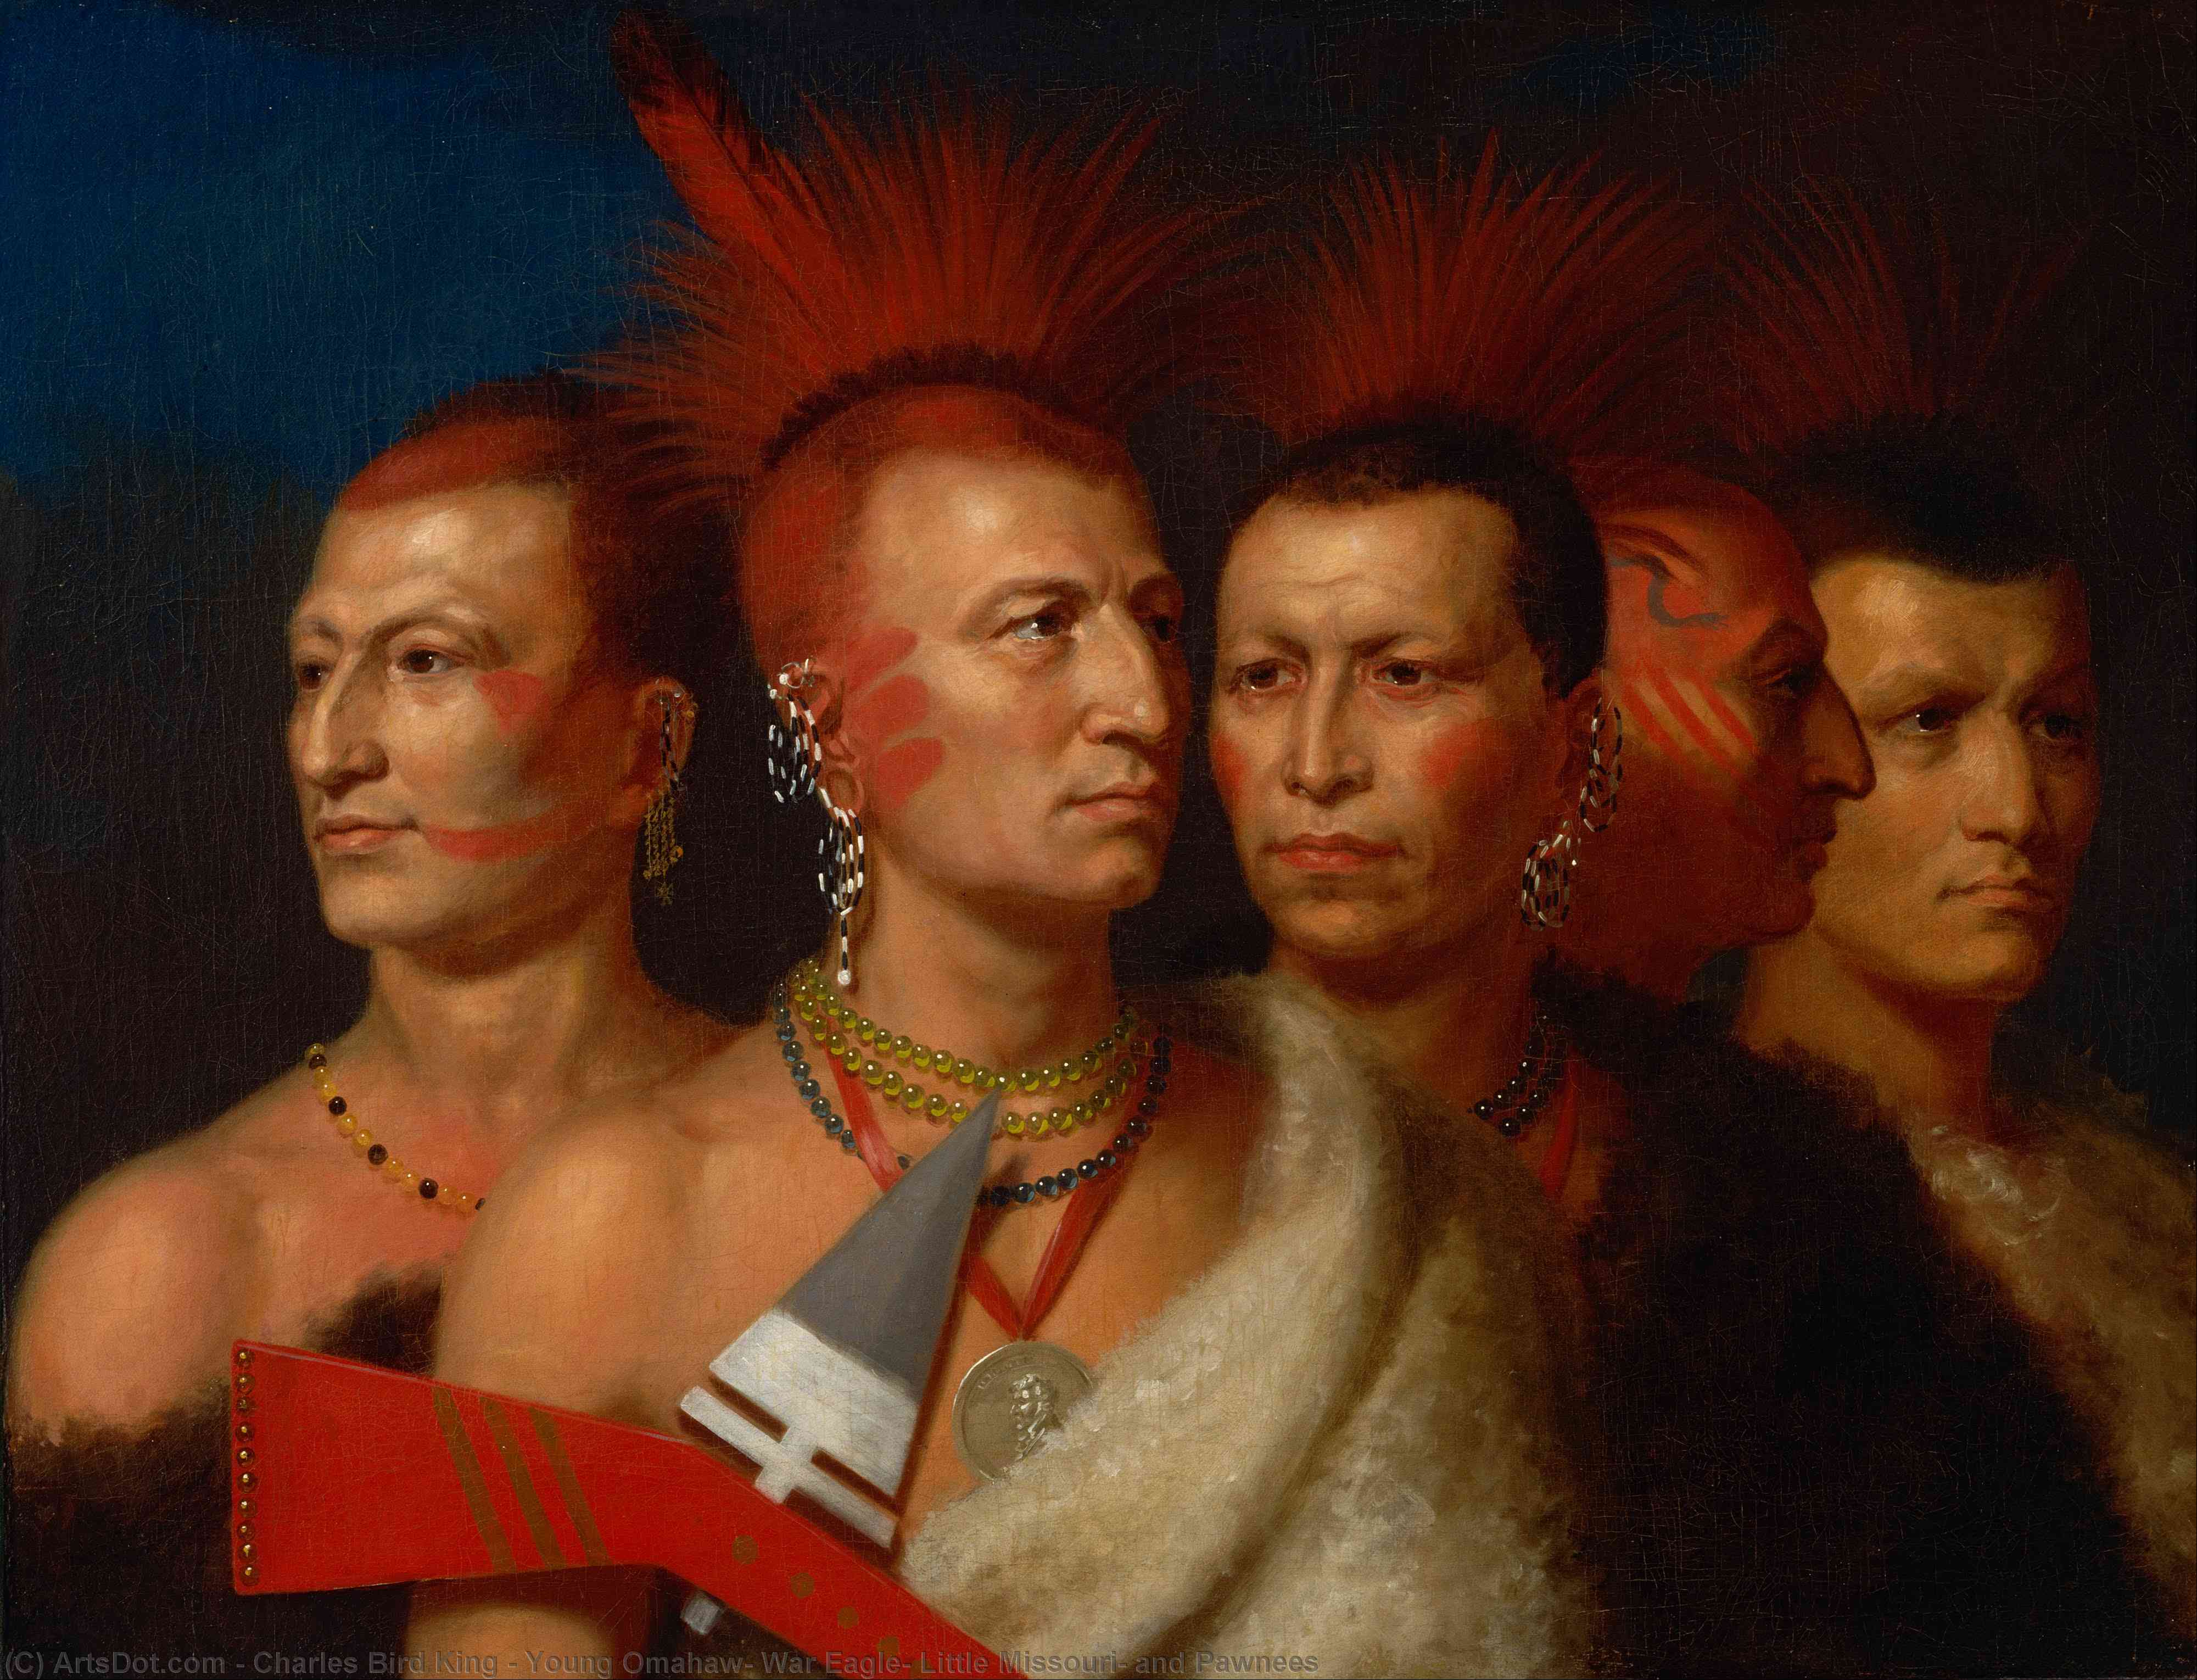 Compra Riproduzioni D'arte Del Museo Young Omahaw, War Eagle, Little Missouri e Pawnees, 1821 di Charles Bird King (1785-1862, United States) | ArtsDot.com